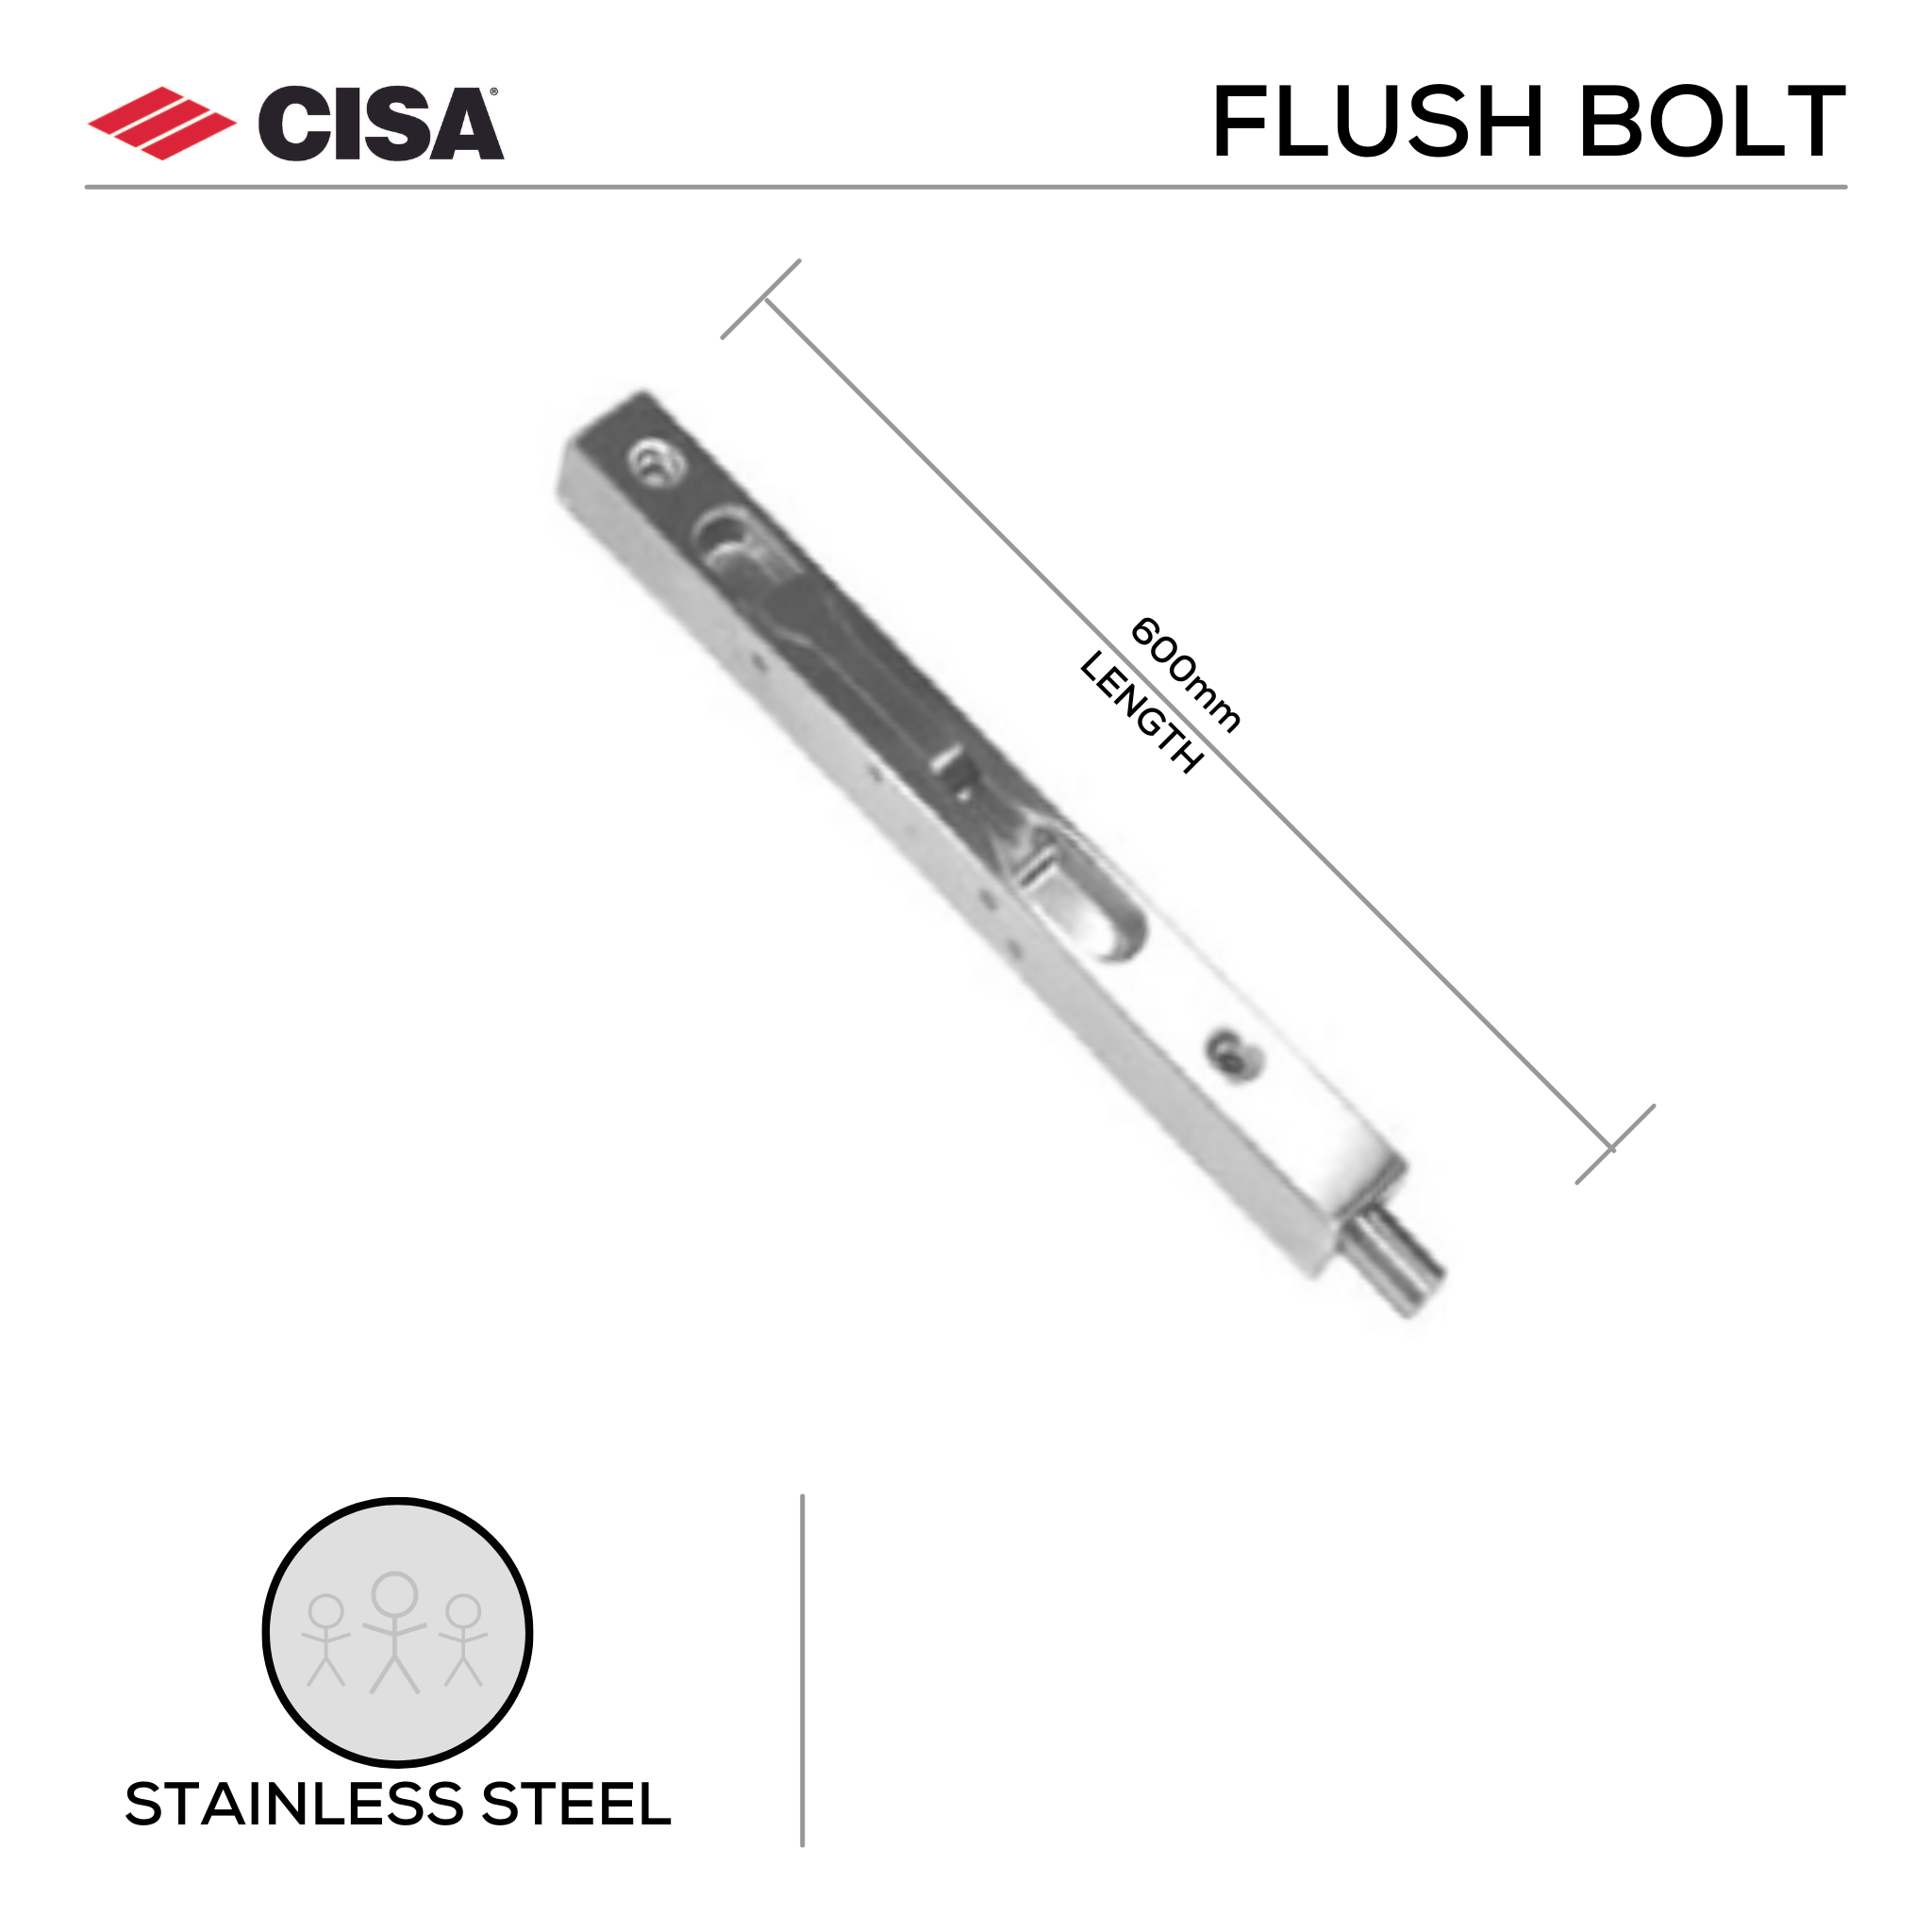 FBB600.SS, Flush Bolt, Box Type, 600mm (l) x 19mm (w), Stainless Steel, CISA